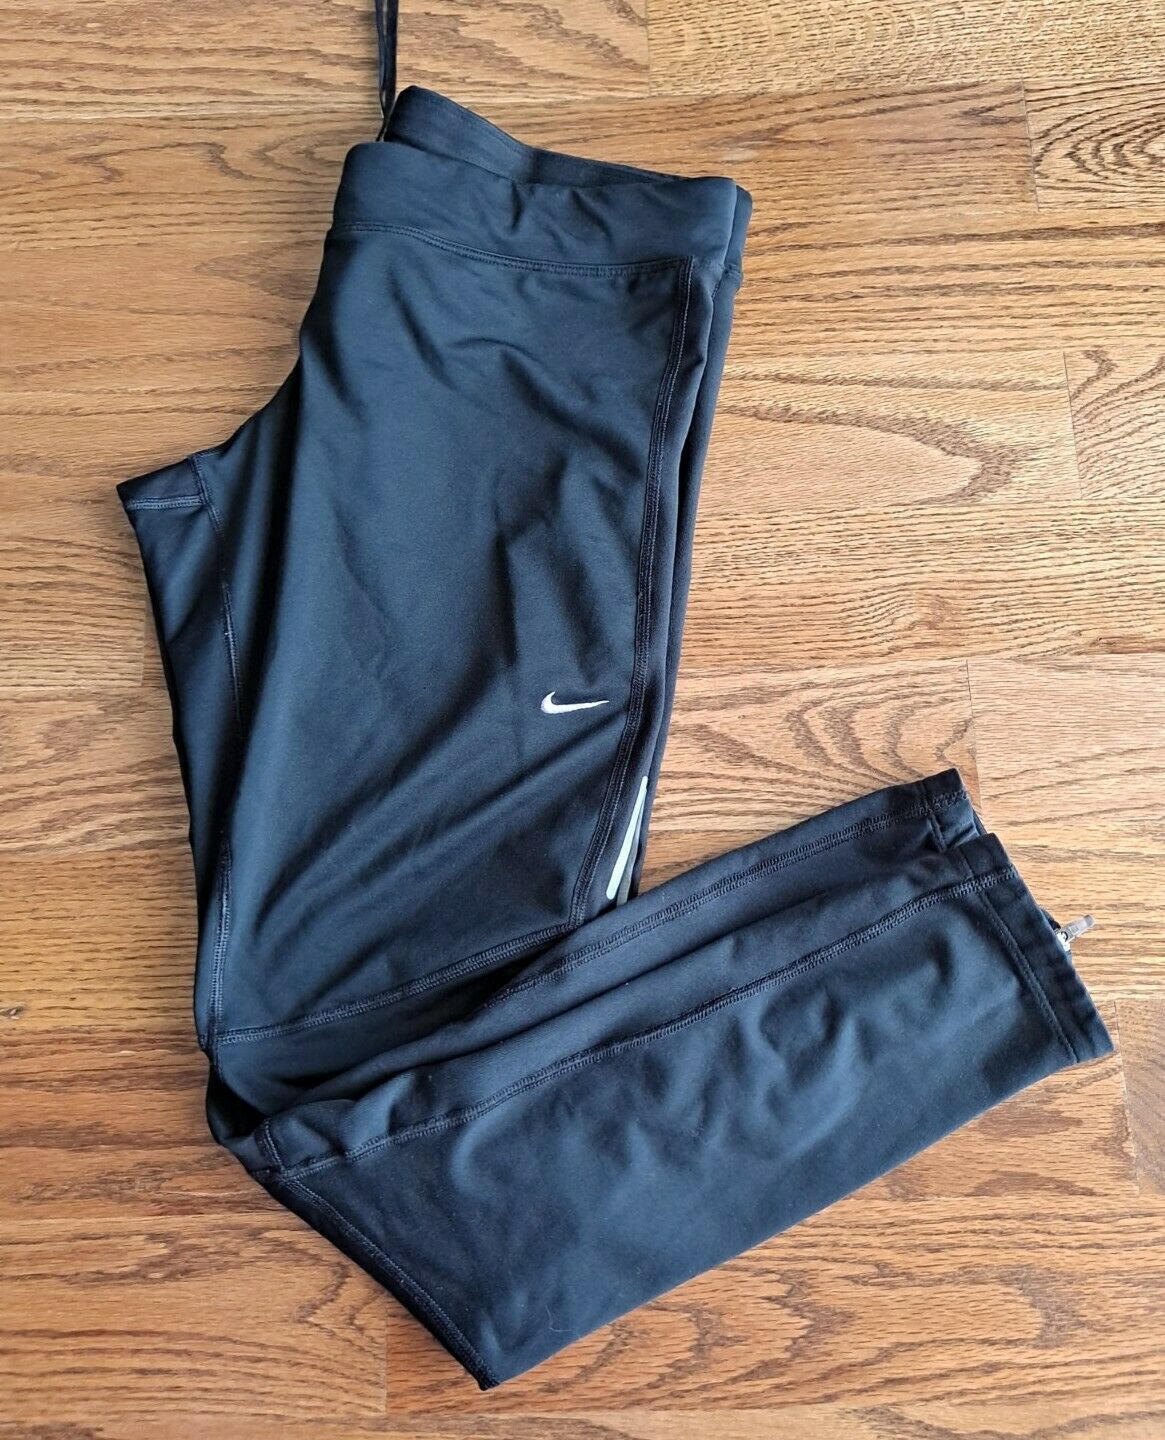 Nike Dri-fit Running Athletic Leggings Pants Women's Size Xl Black